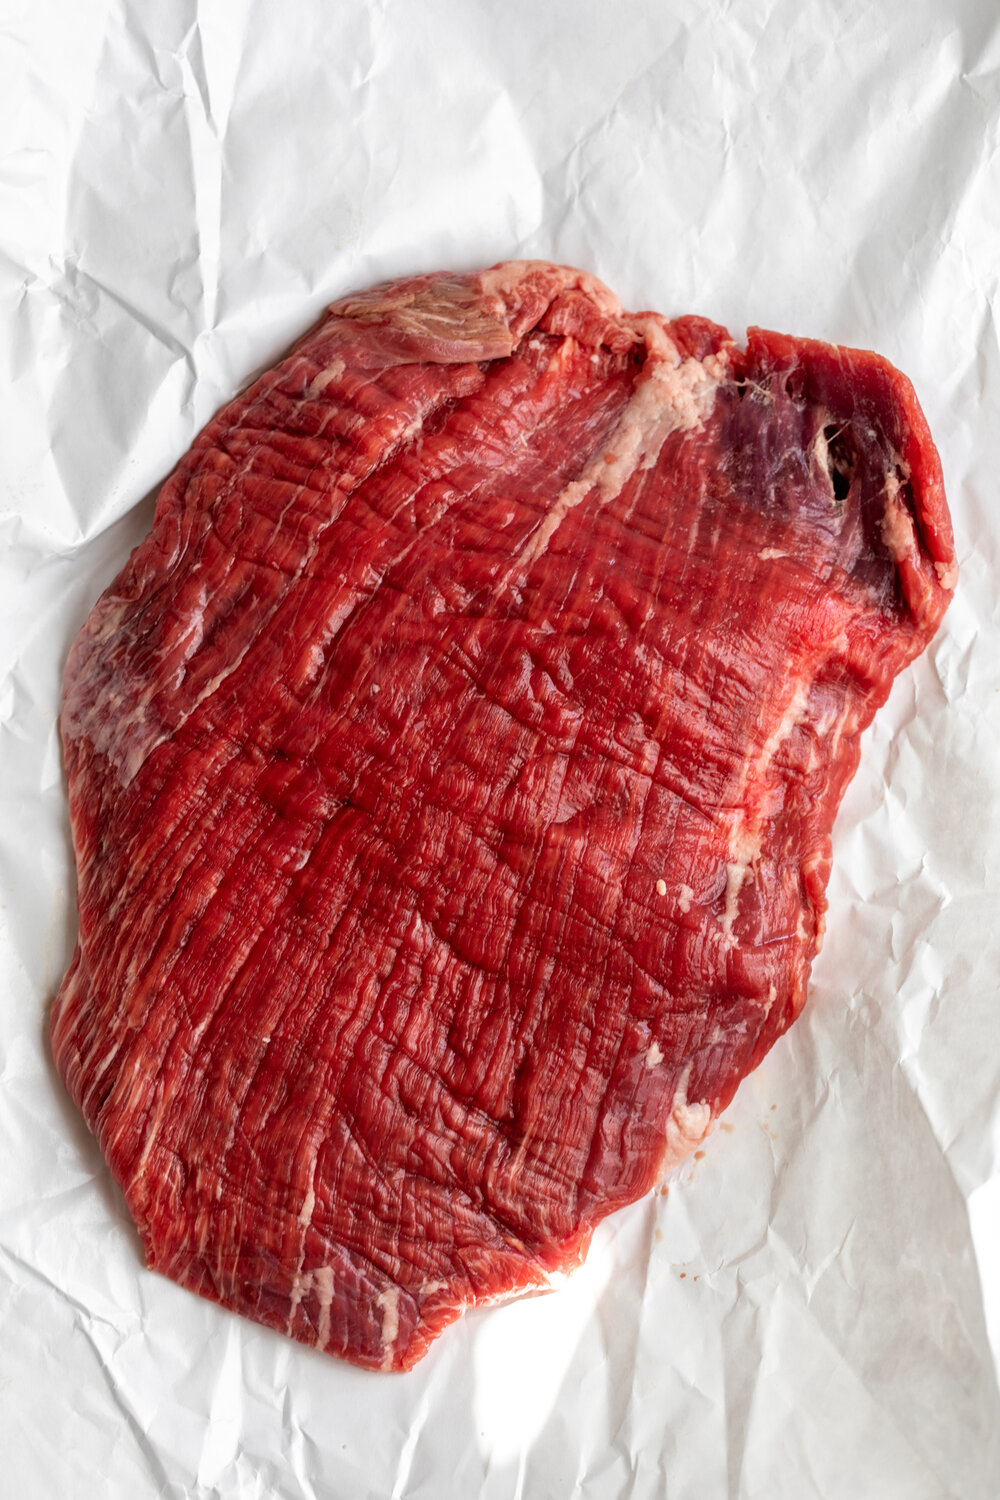 flank steak on butcher paper